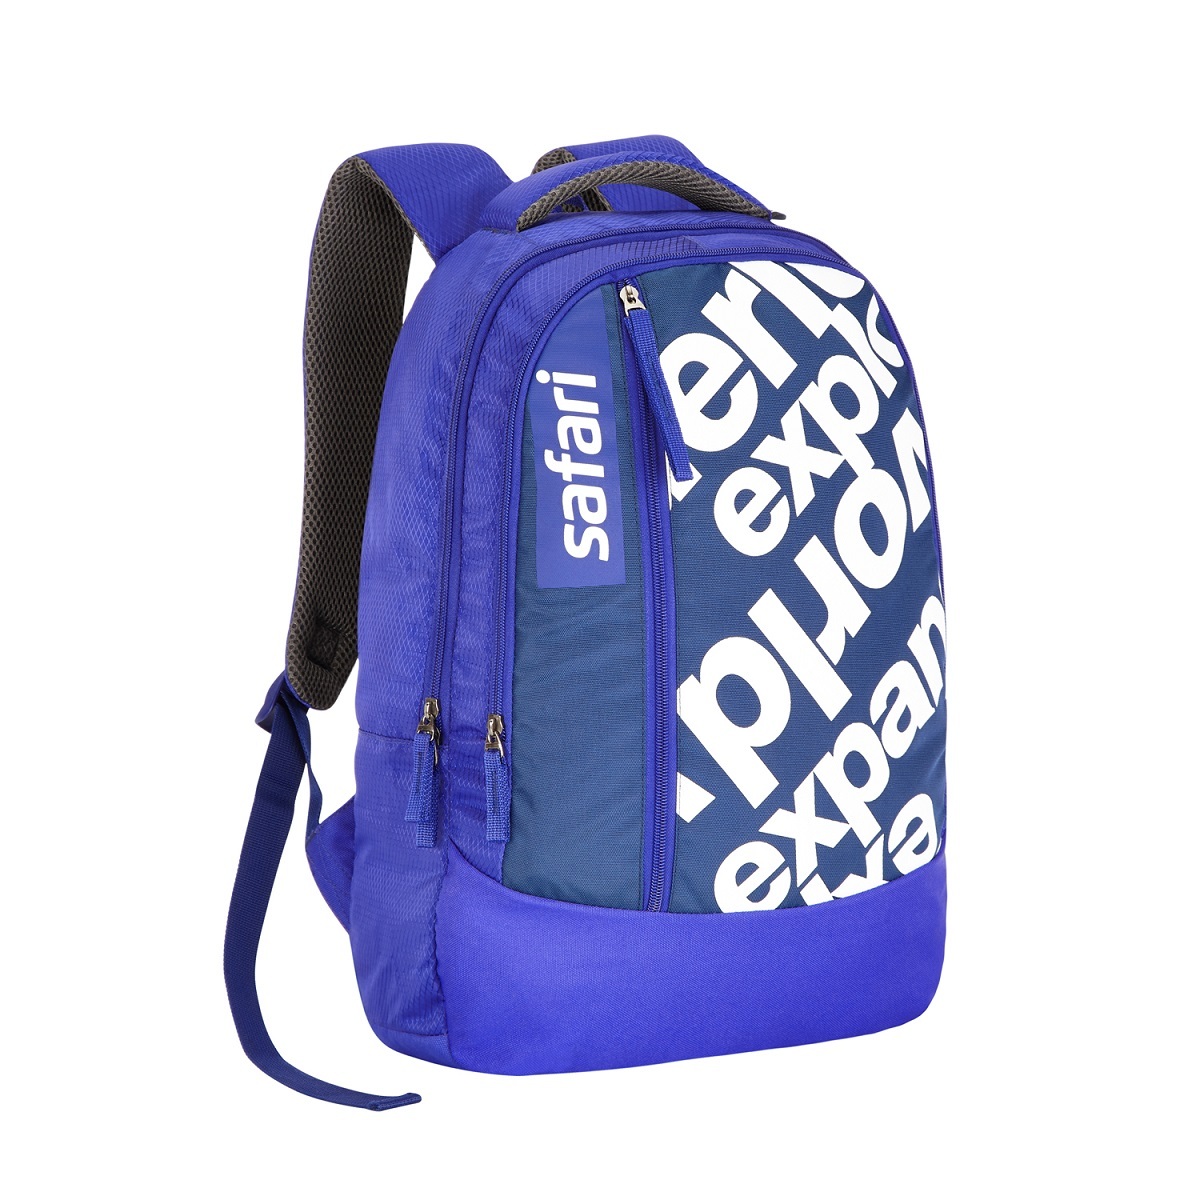 Safari Backpack Journey 19Inch Blue